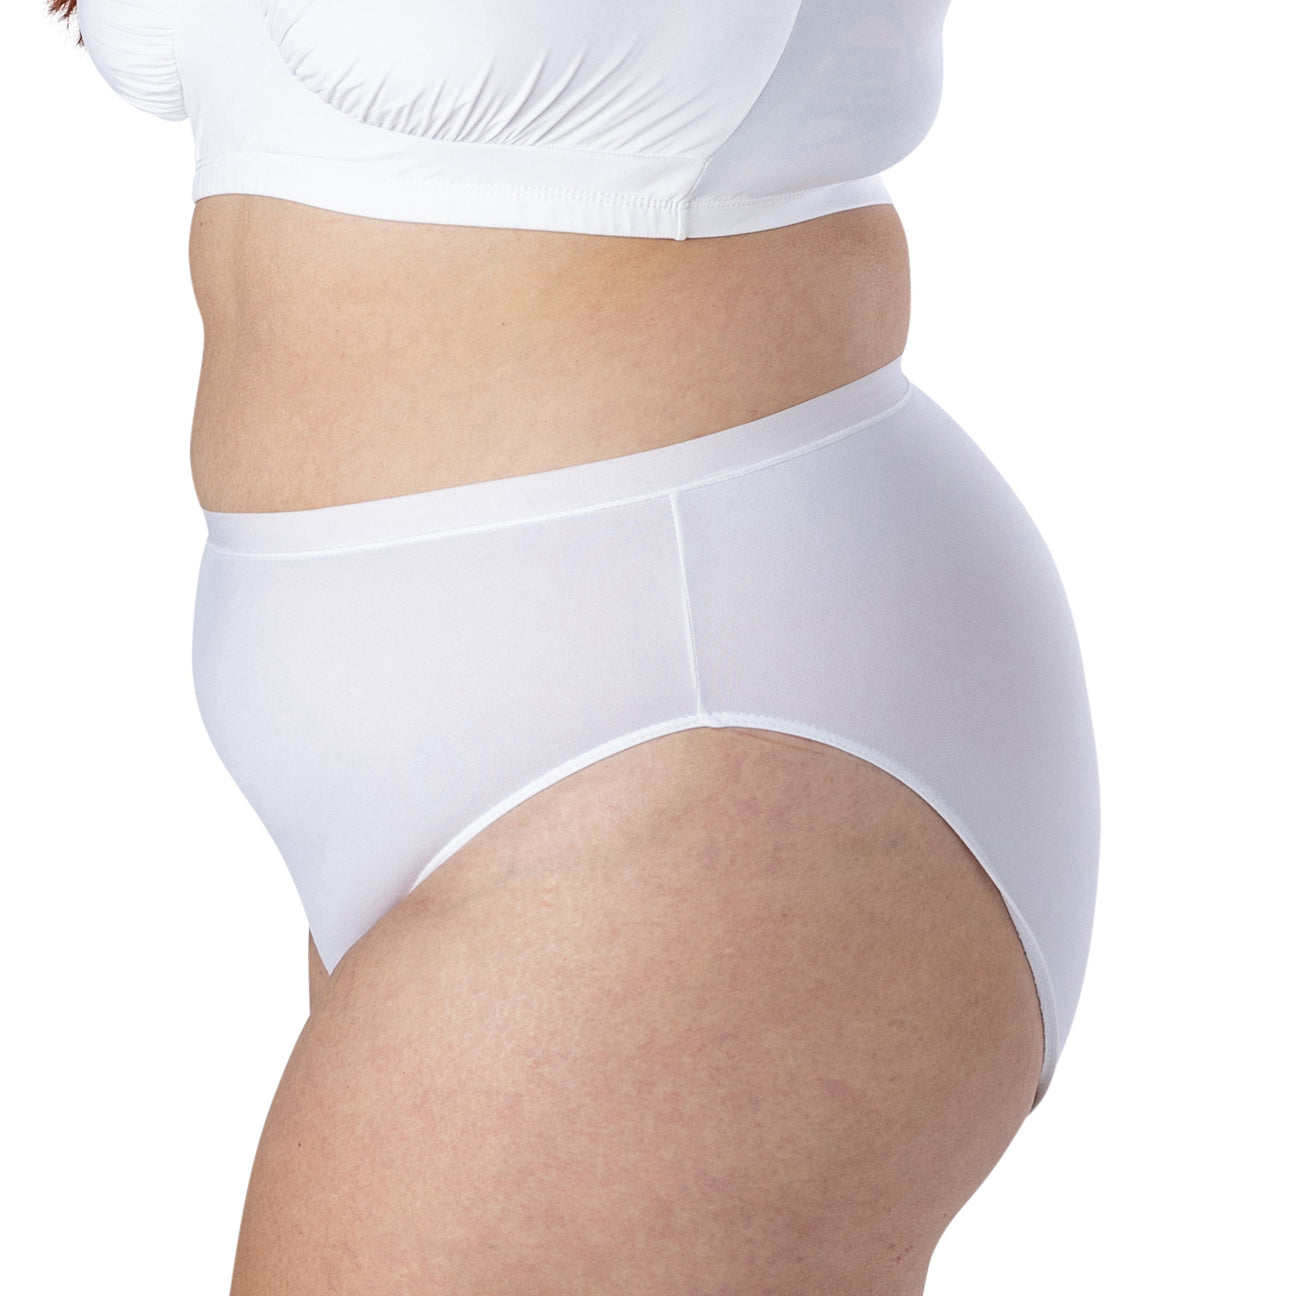 Elita Women's Full High Cut Soft Cotton Panty, White, Large at